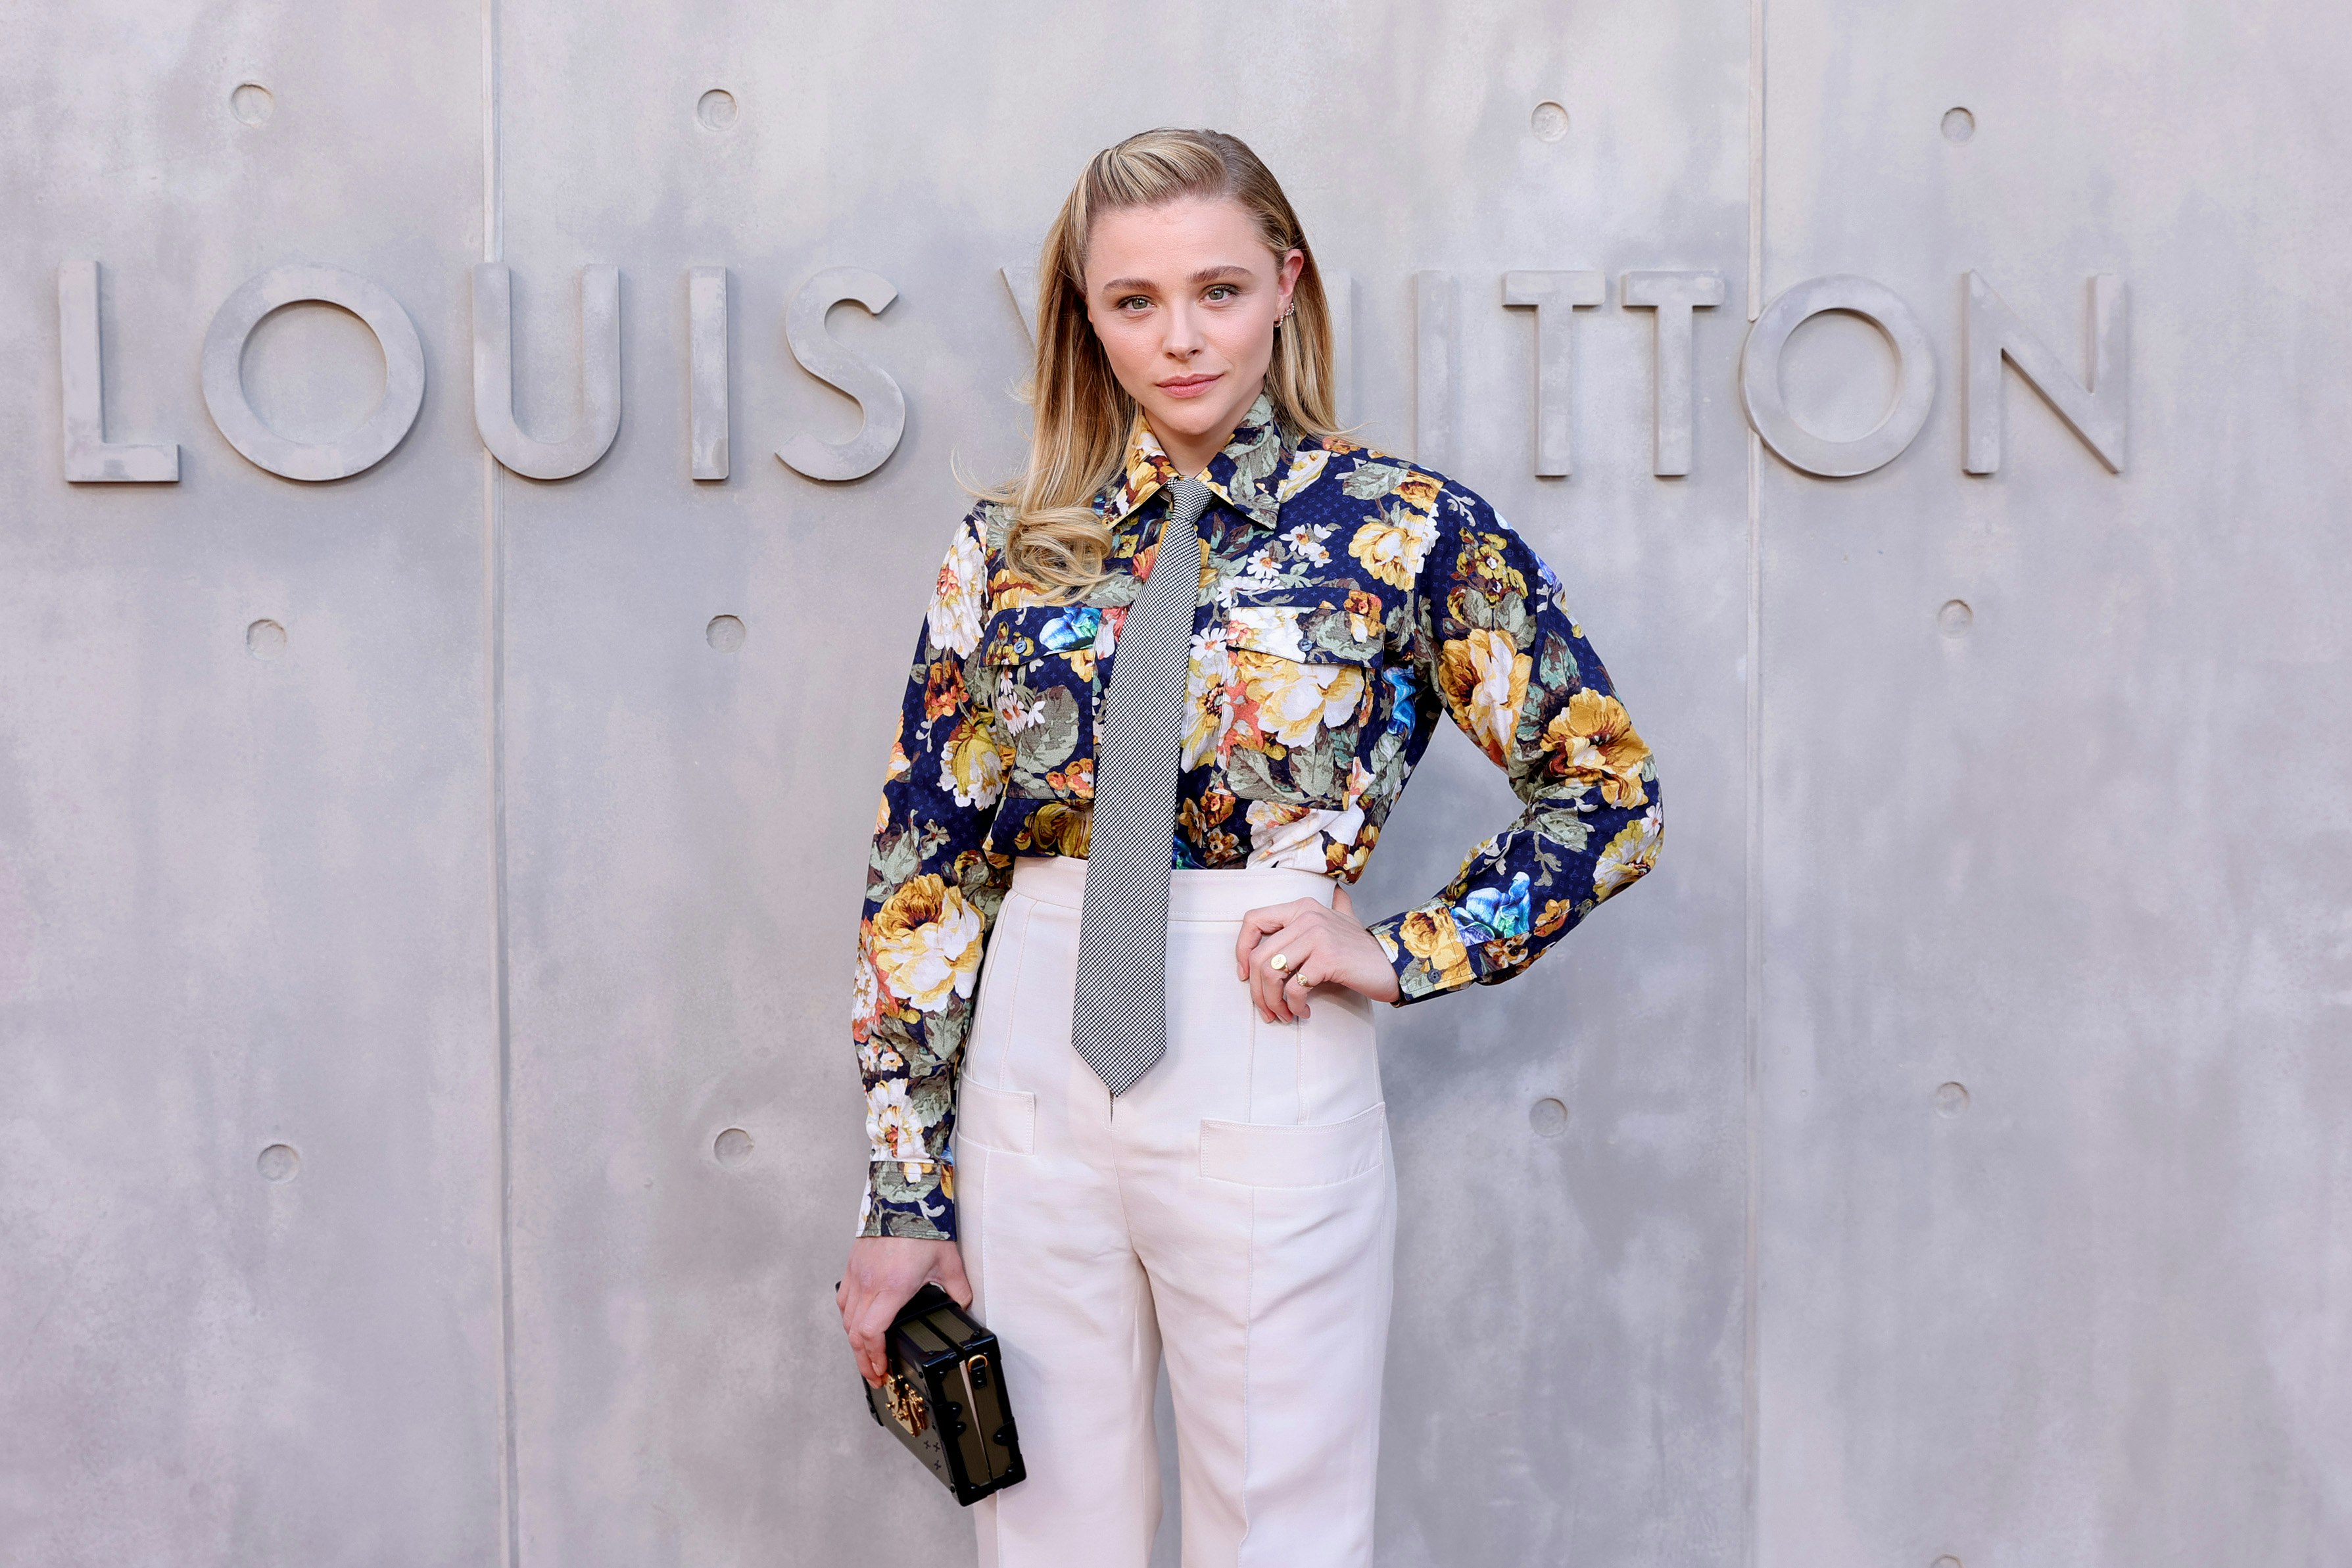 Street style, Chloe Grace Moretz arriving at Louis Vuitton Fall